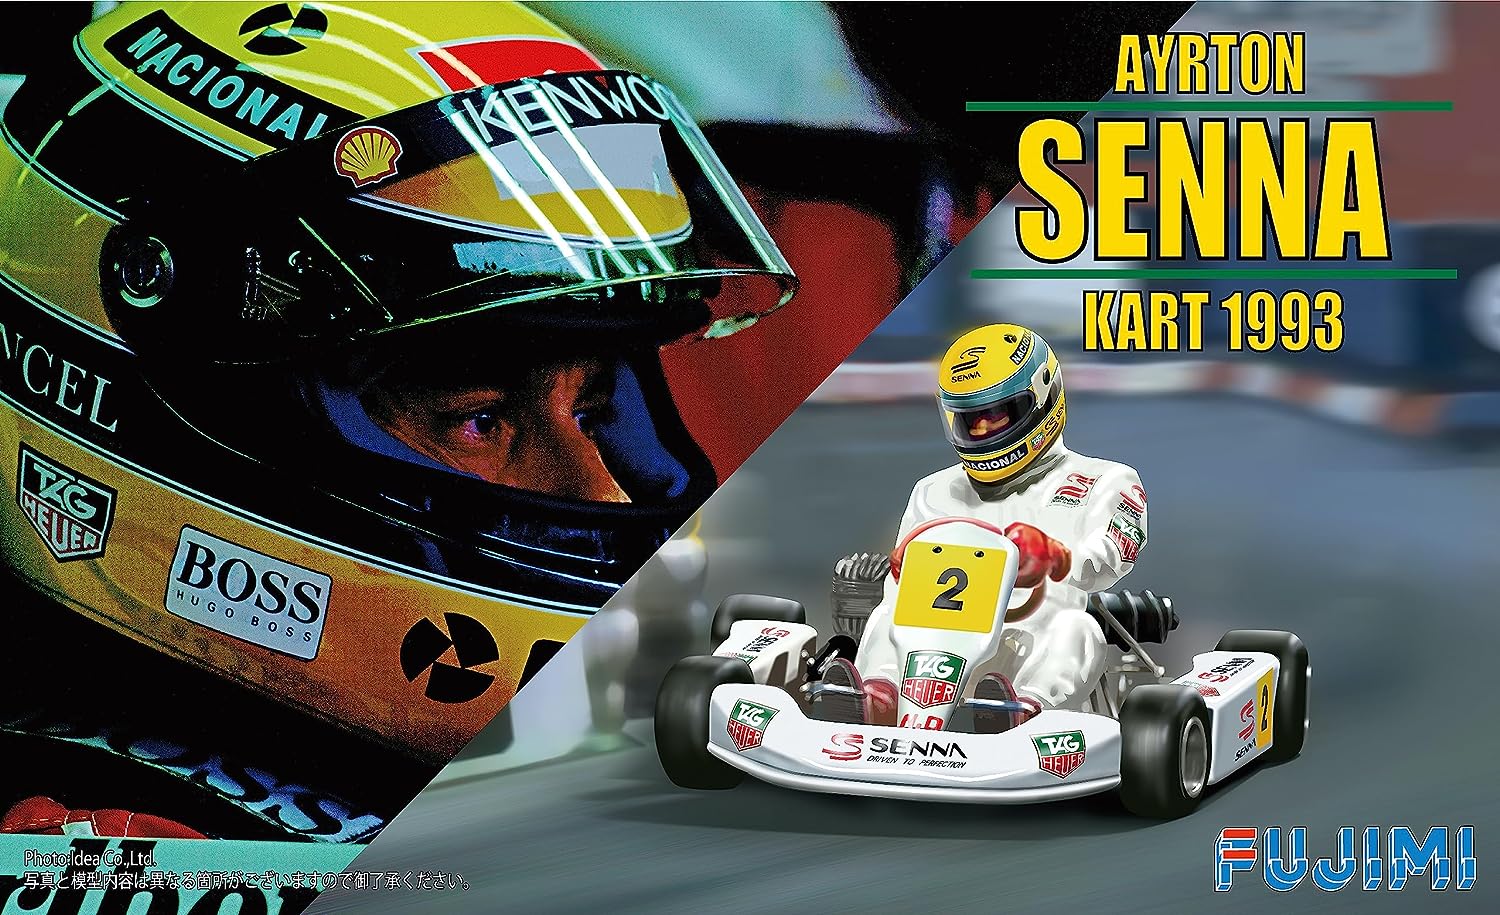 KART Series No.2 Ayrton Senna Kurt 1993 (1/20 scale)